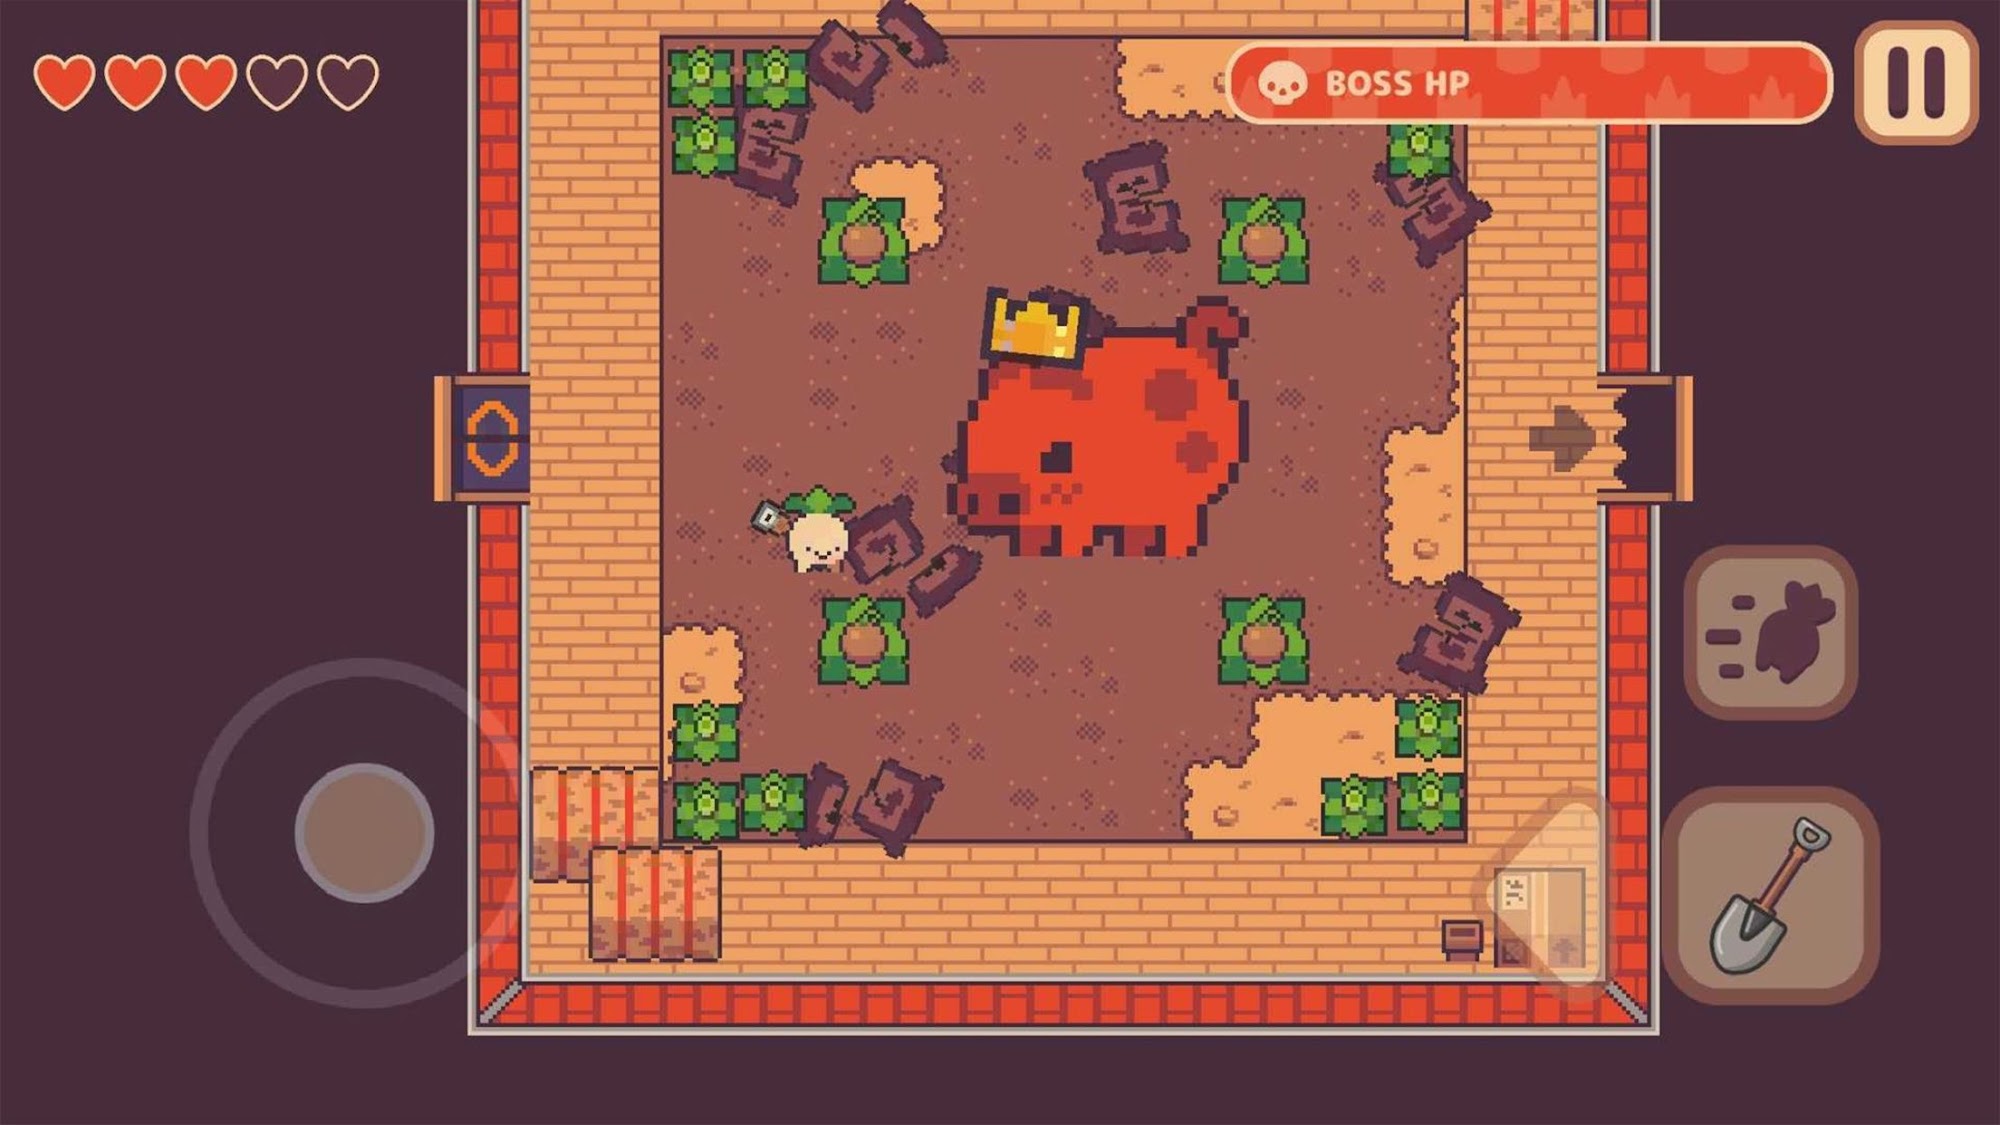 Turnip Boy Commits Tax Evasion - Android game screenshots.